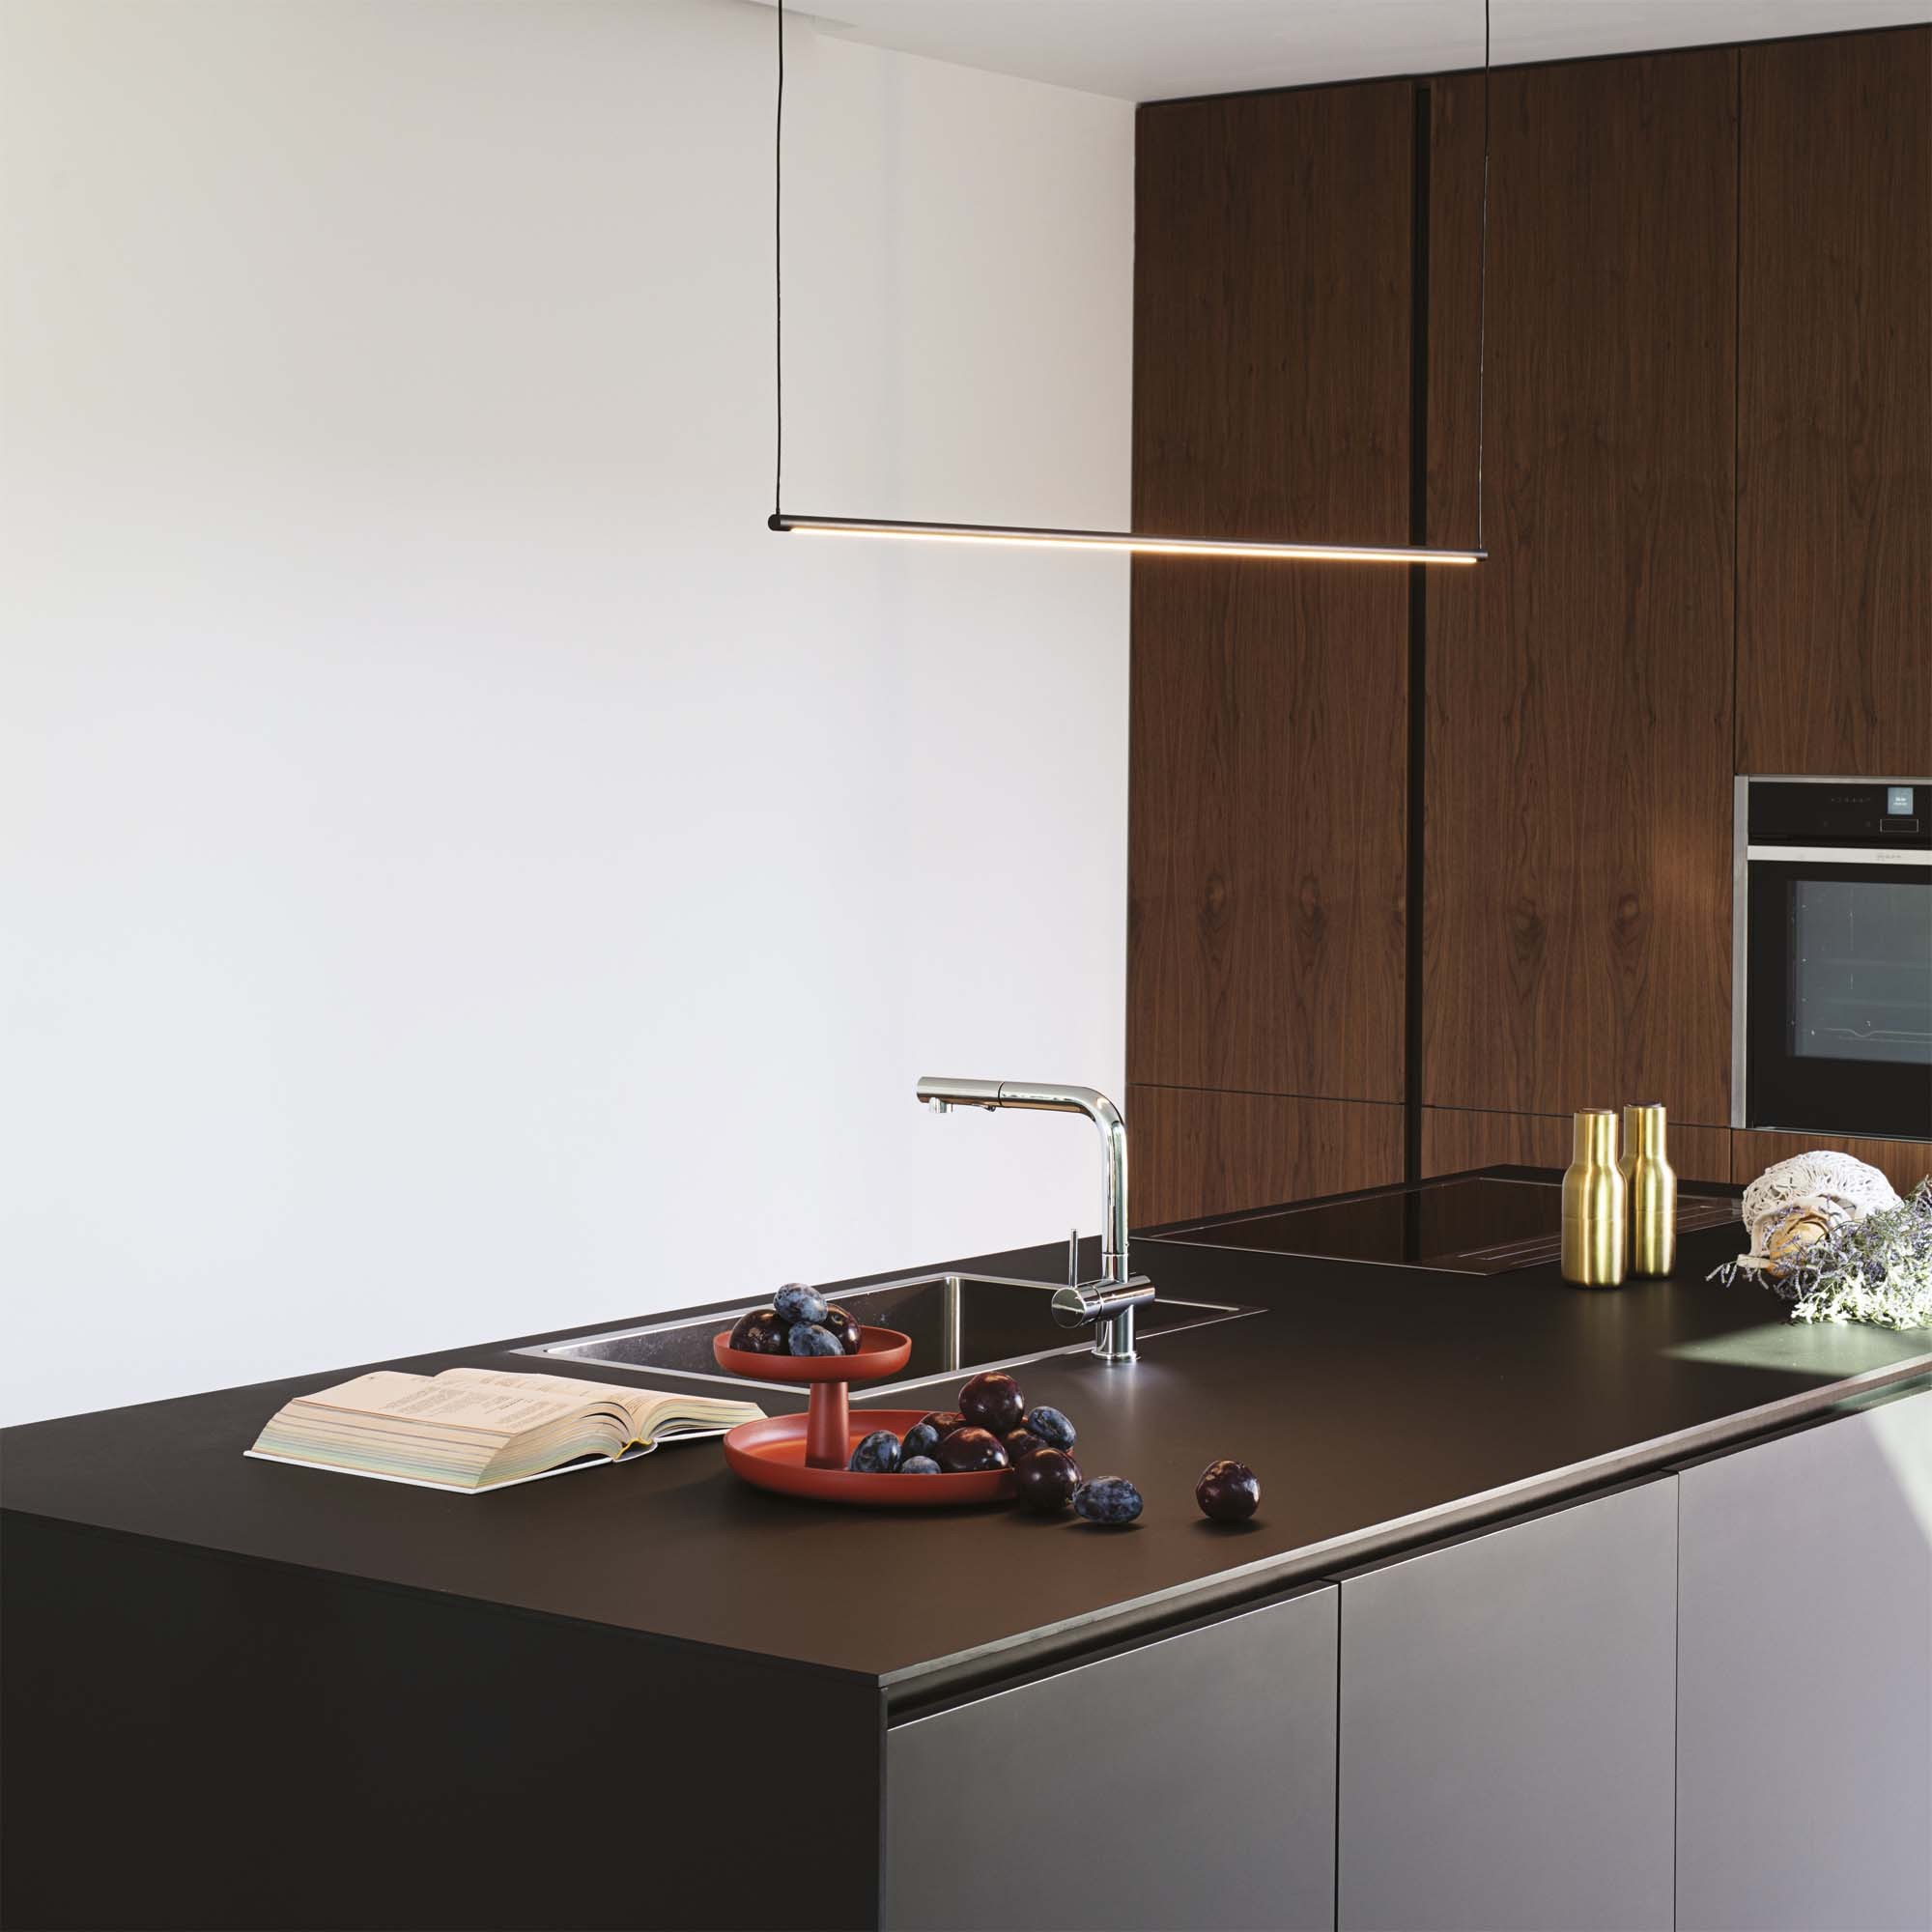 Lampadario a led design moderno nero per cucina studio DL1661